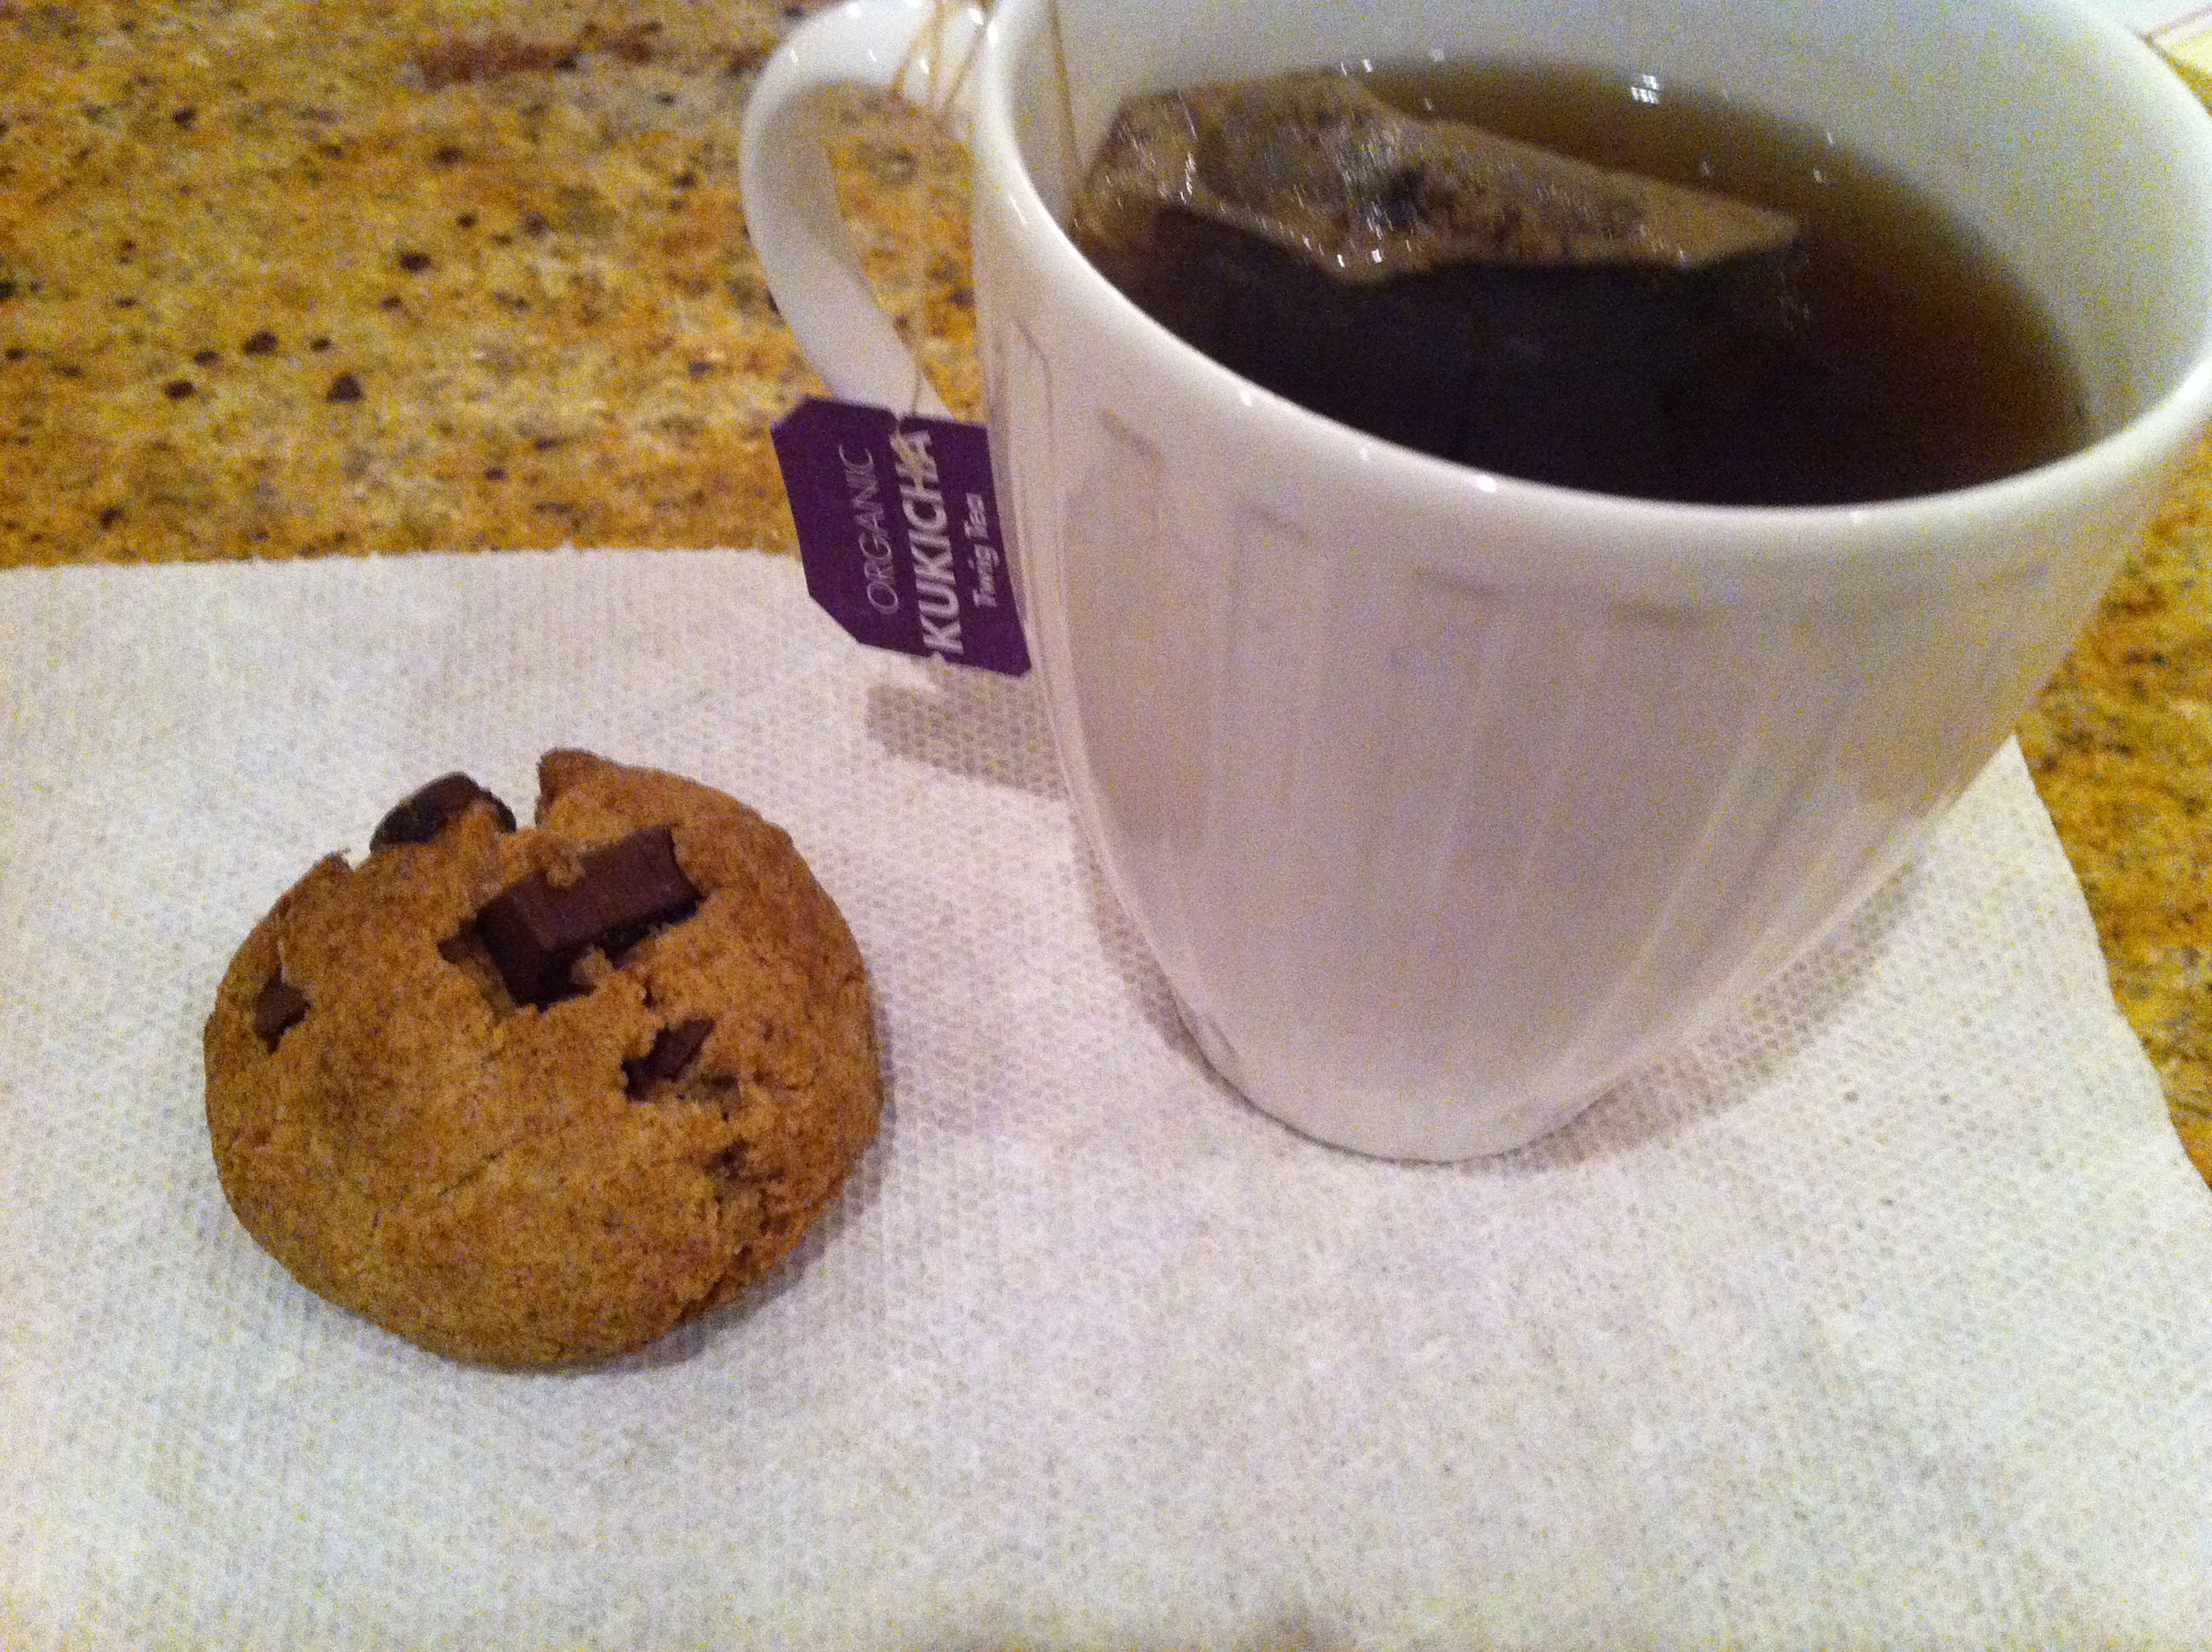 Vegan chocolate chip cookies and kukicha tea make a superb late night snack.